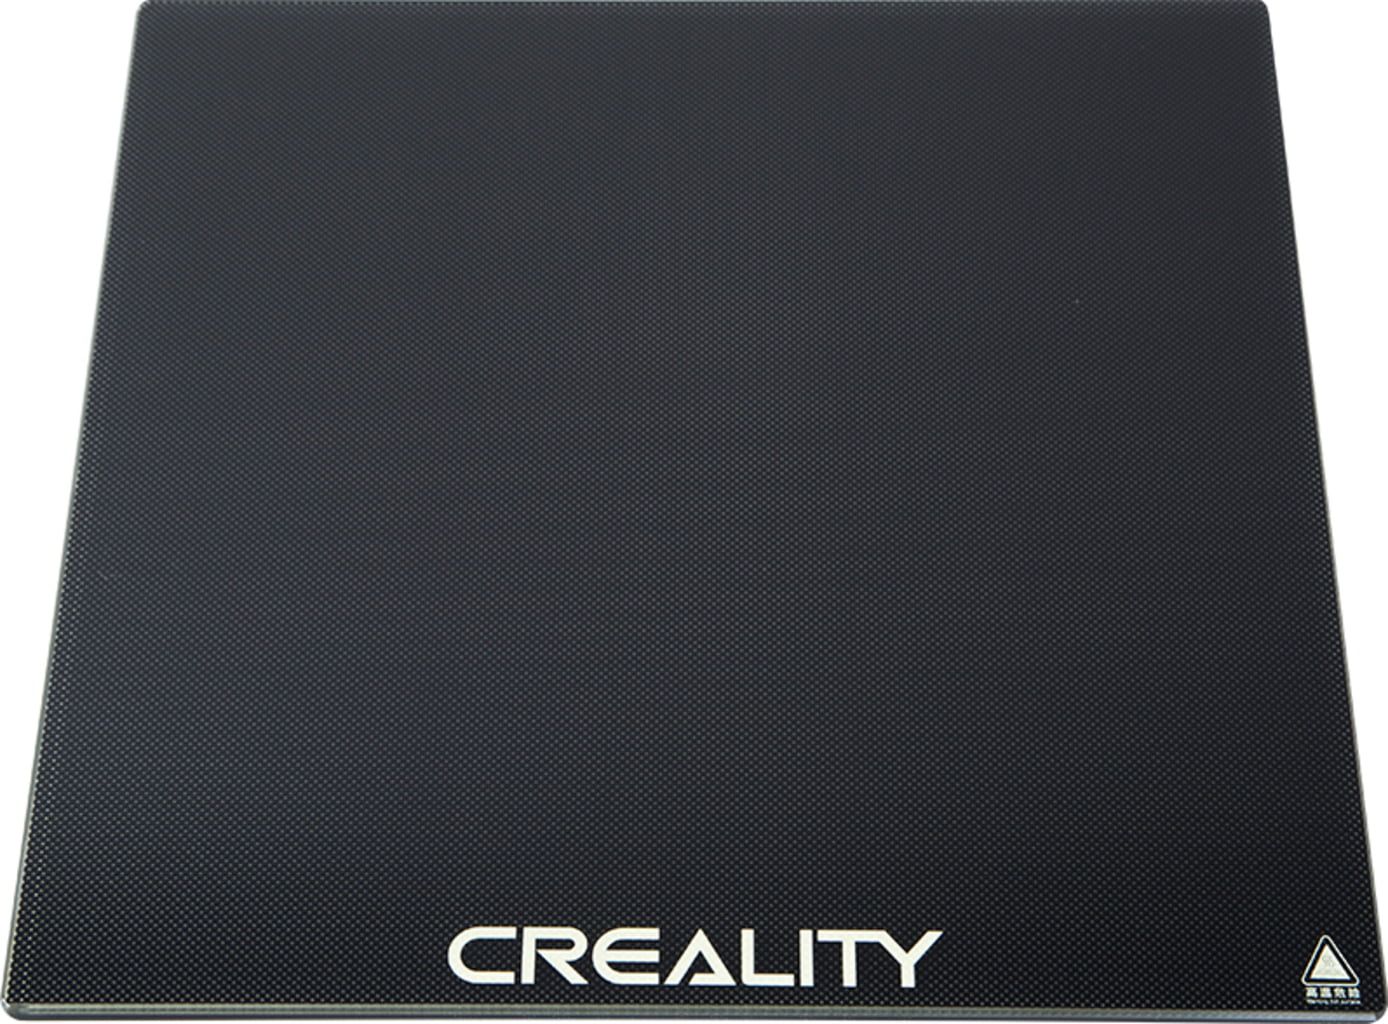 Creality Carborundum-lasilevy - Ender 3